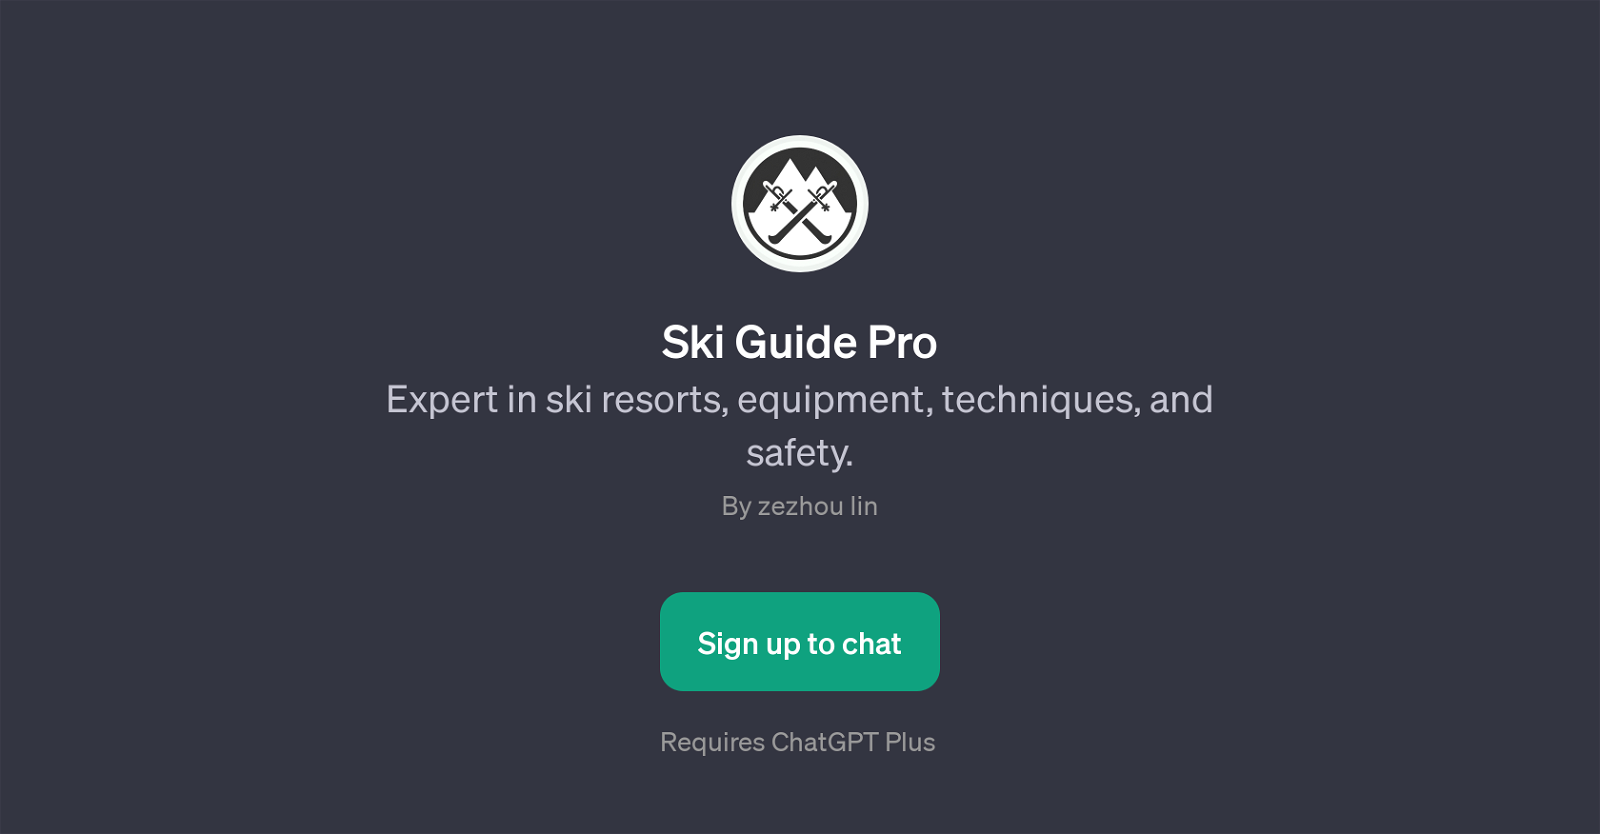 Ski Guide Pro website